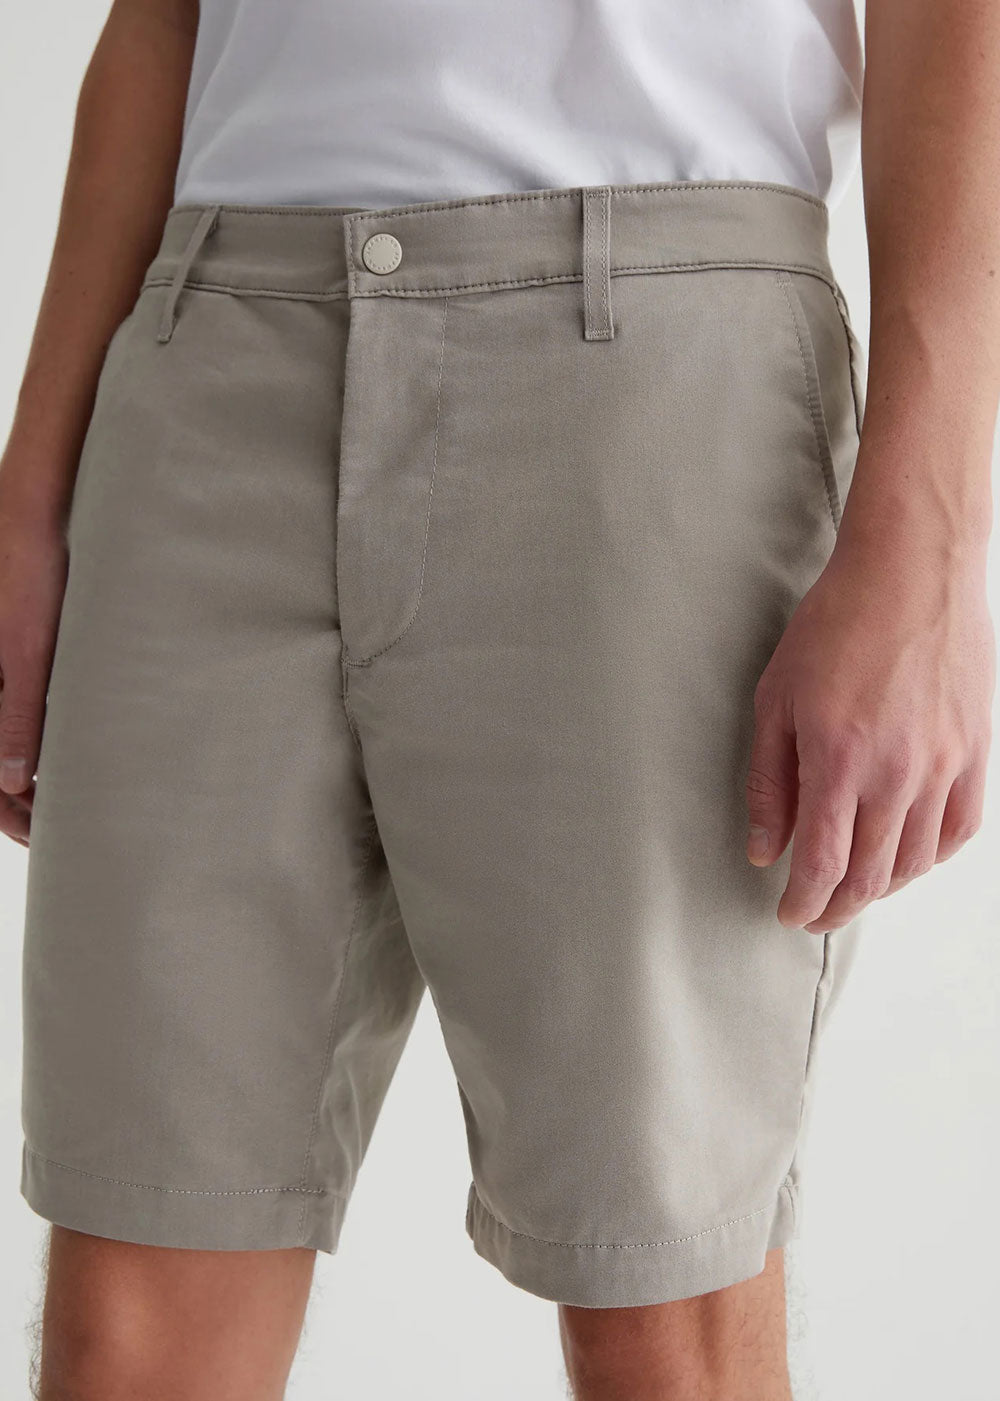 Wanderer Shorts - Dry Dust - AG Jeans - Danali - 1197BRSDYDT